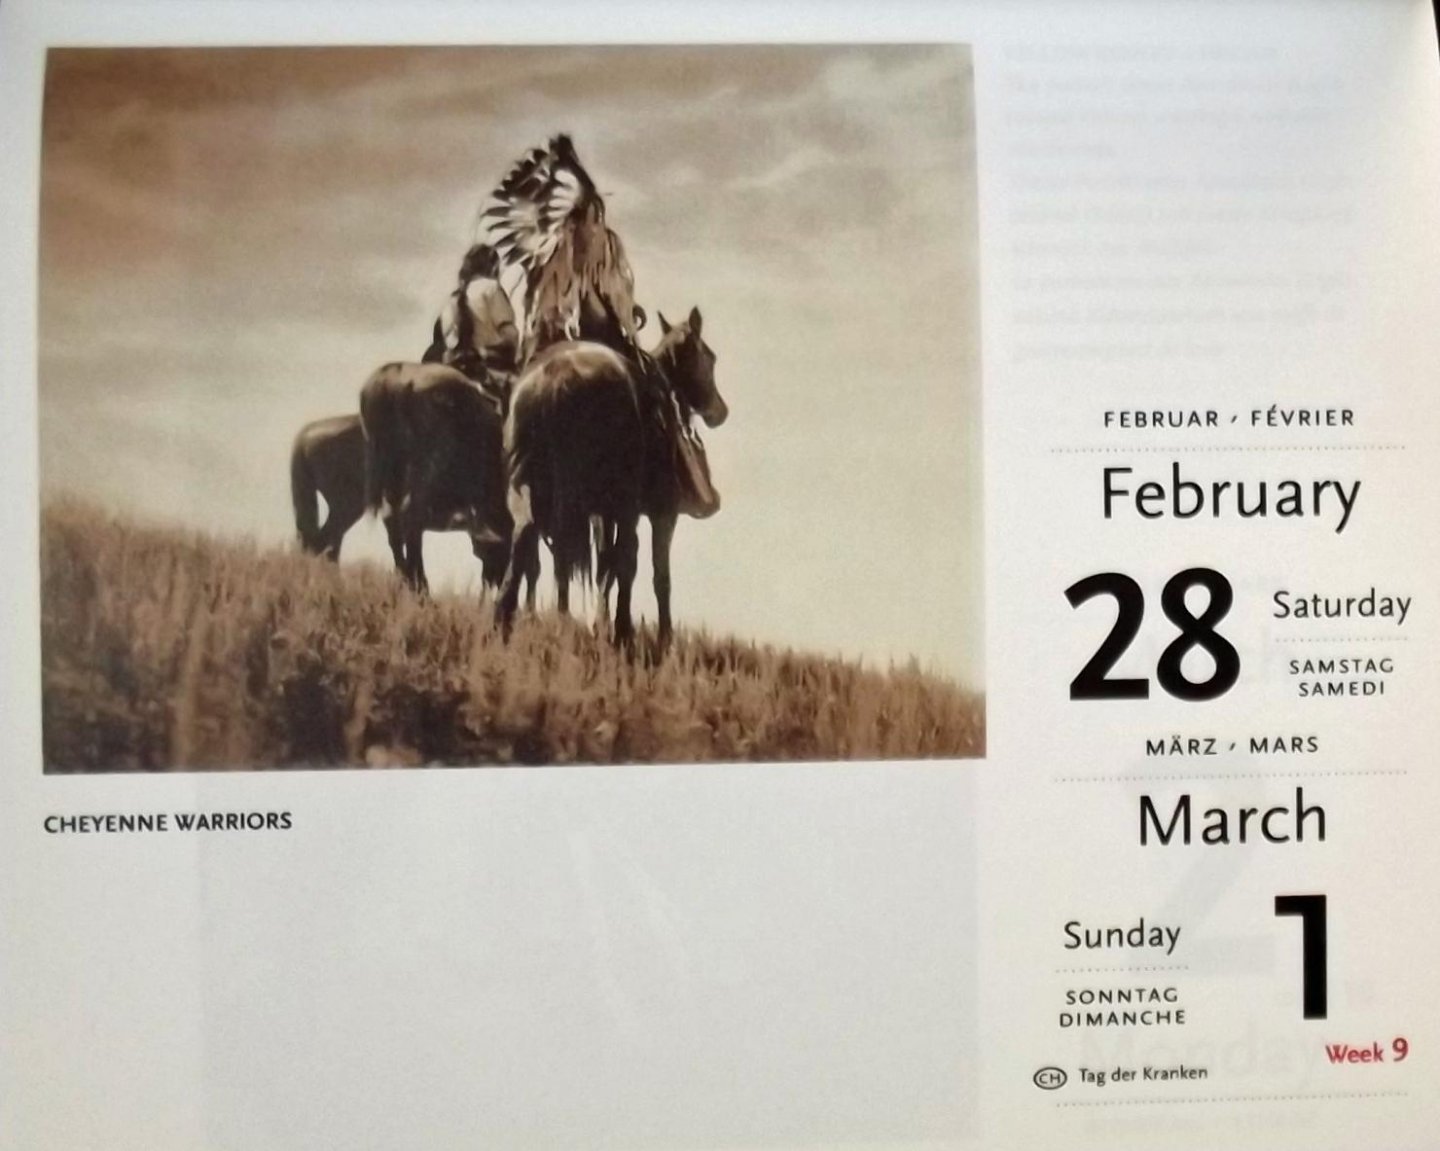 Edward Sheriff Curtis (fotografie) - The North American Indian. 1998 Taschen calendar.